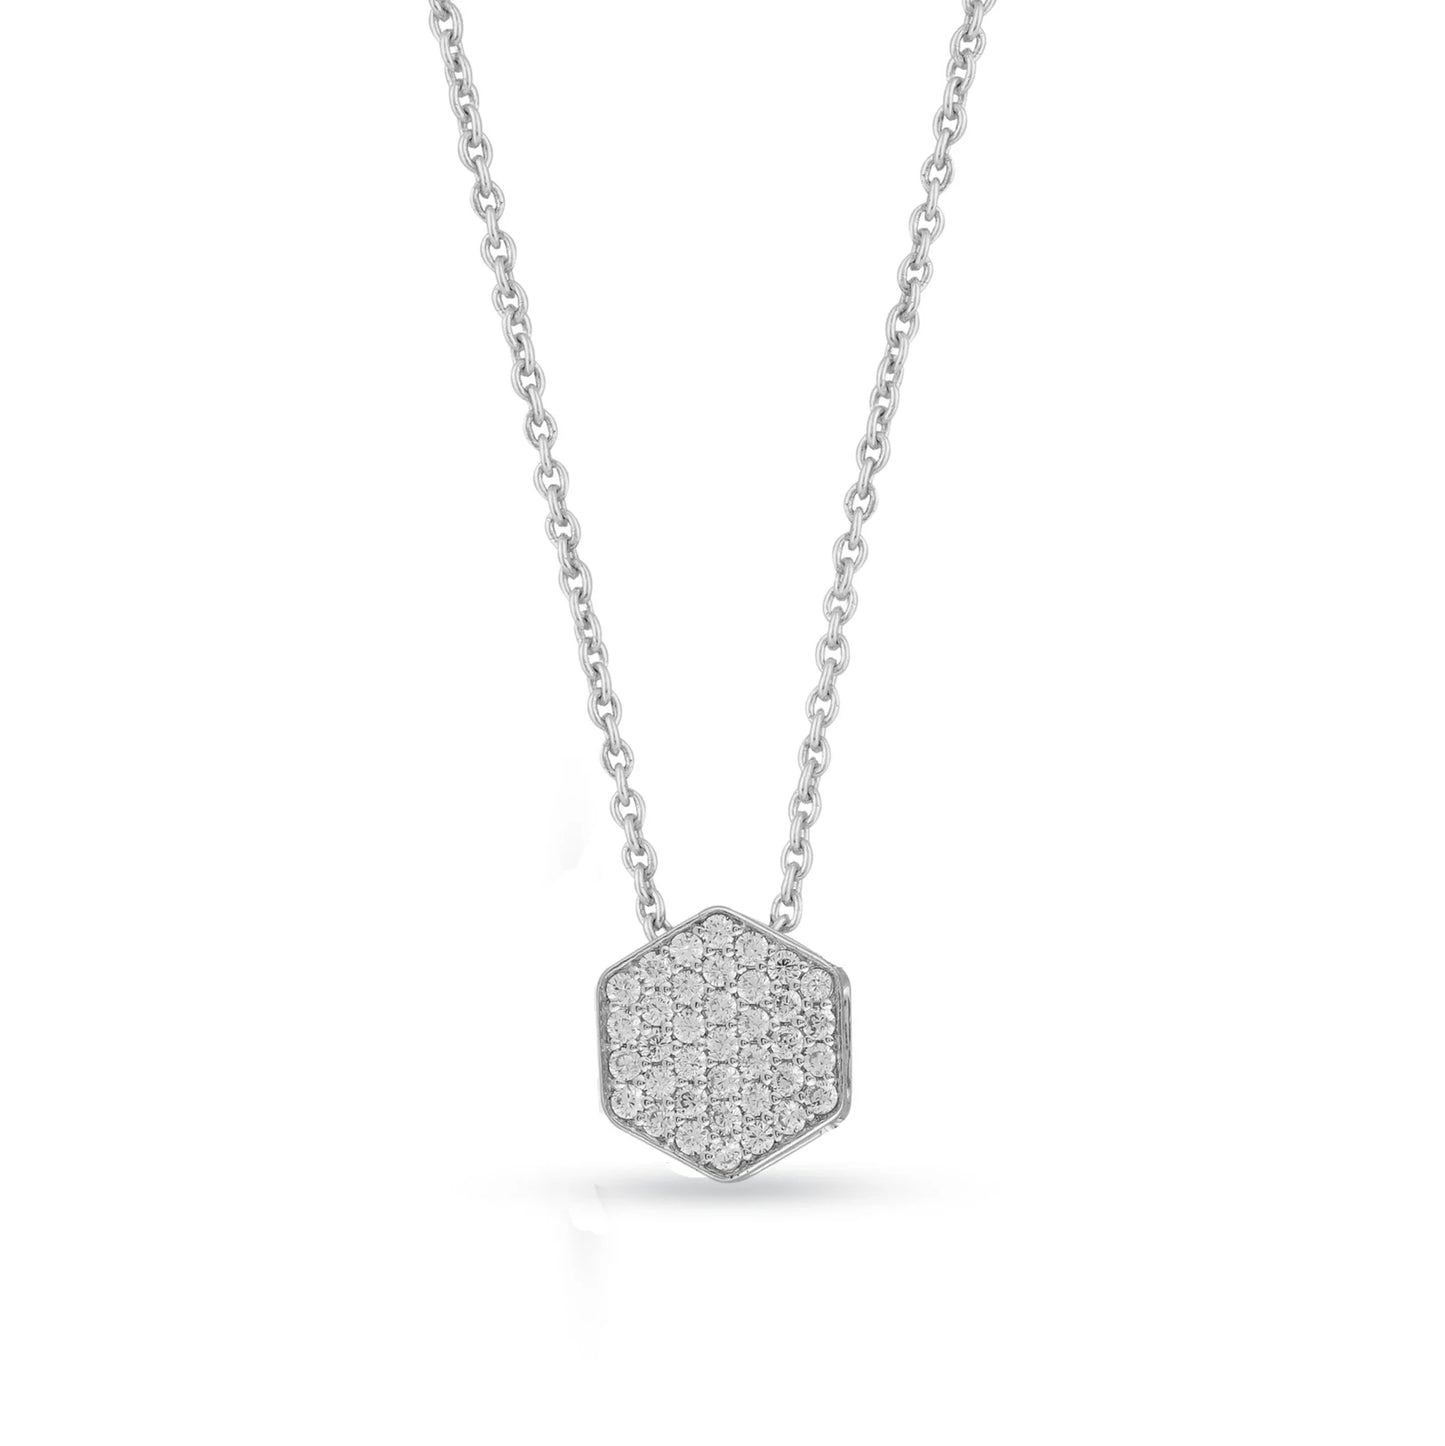 Hexagonal Lab Grown Diamond Pendant for a Stylish Look